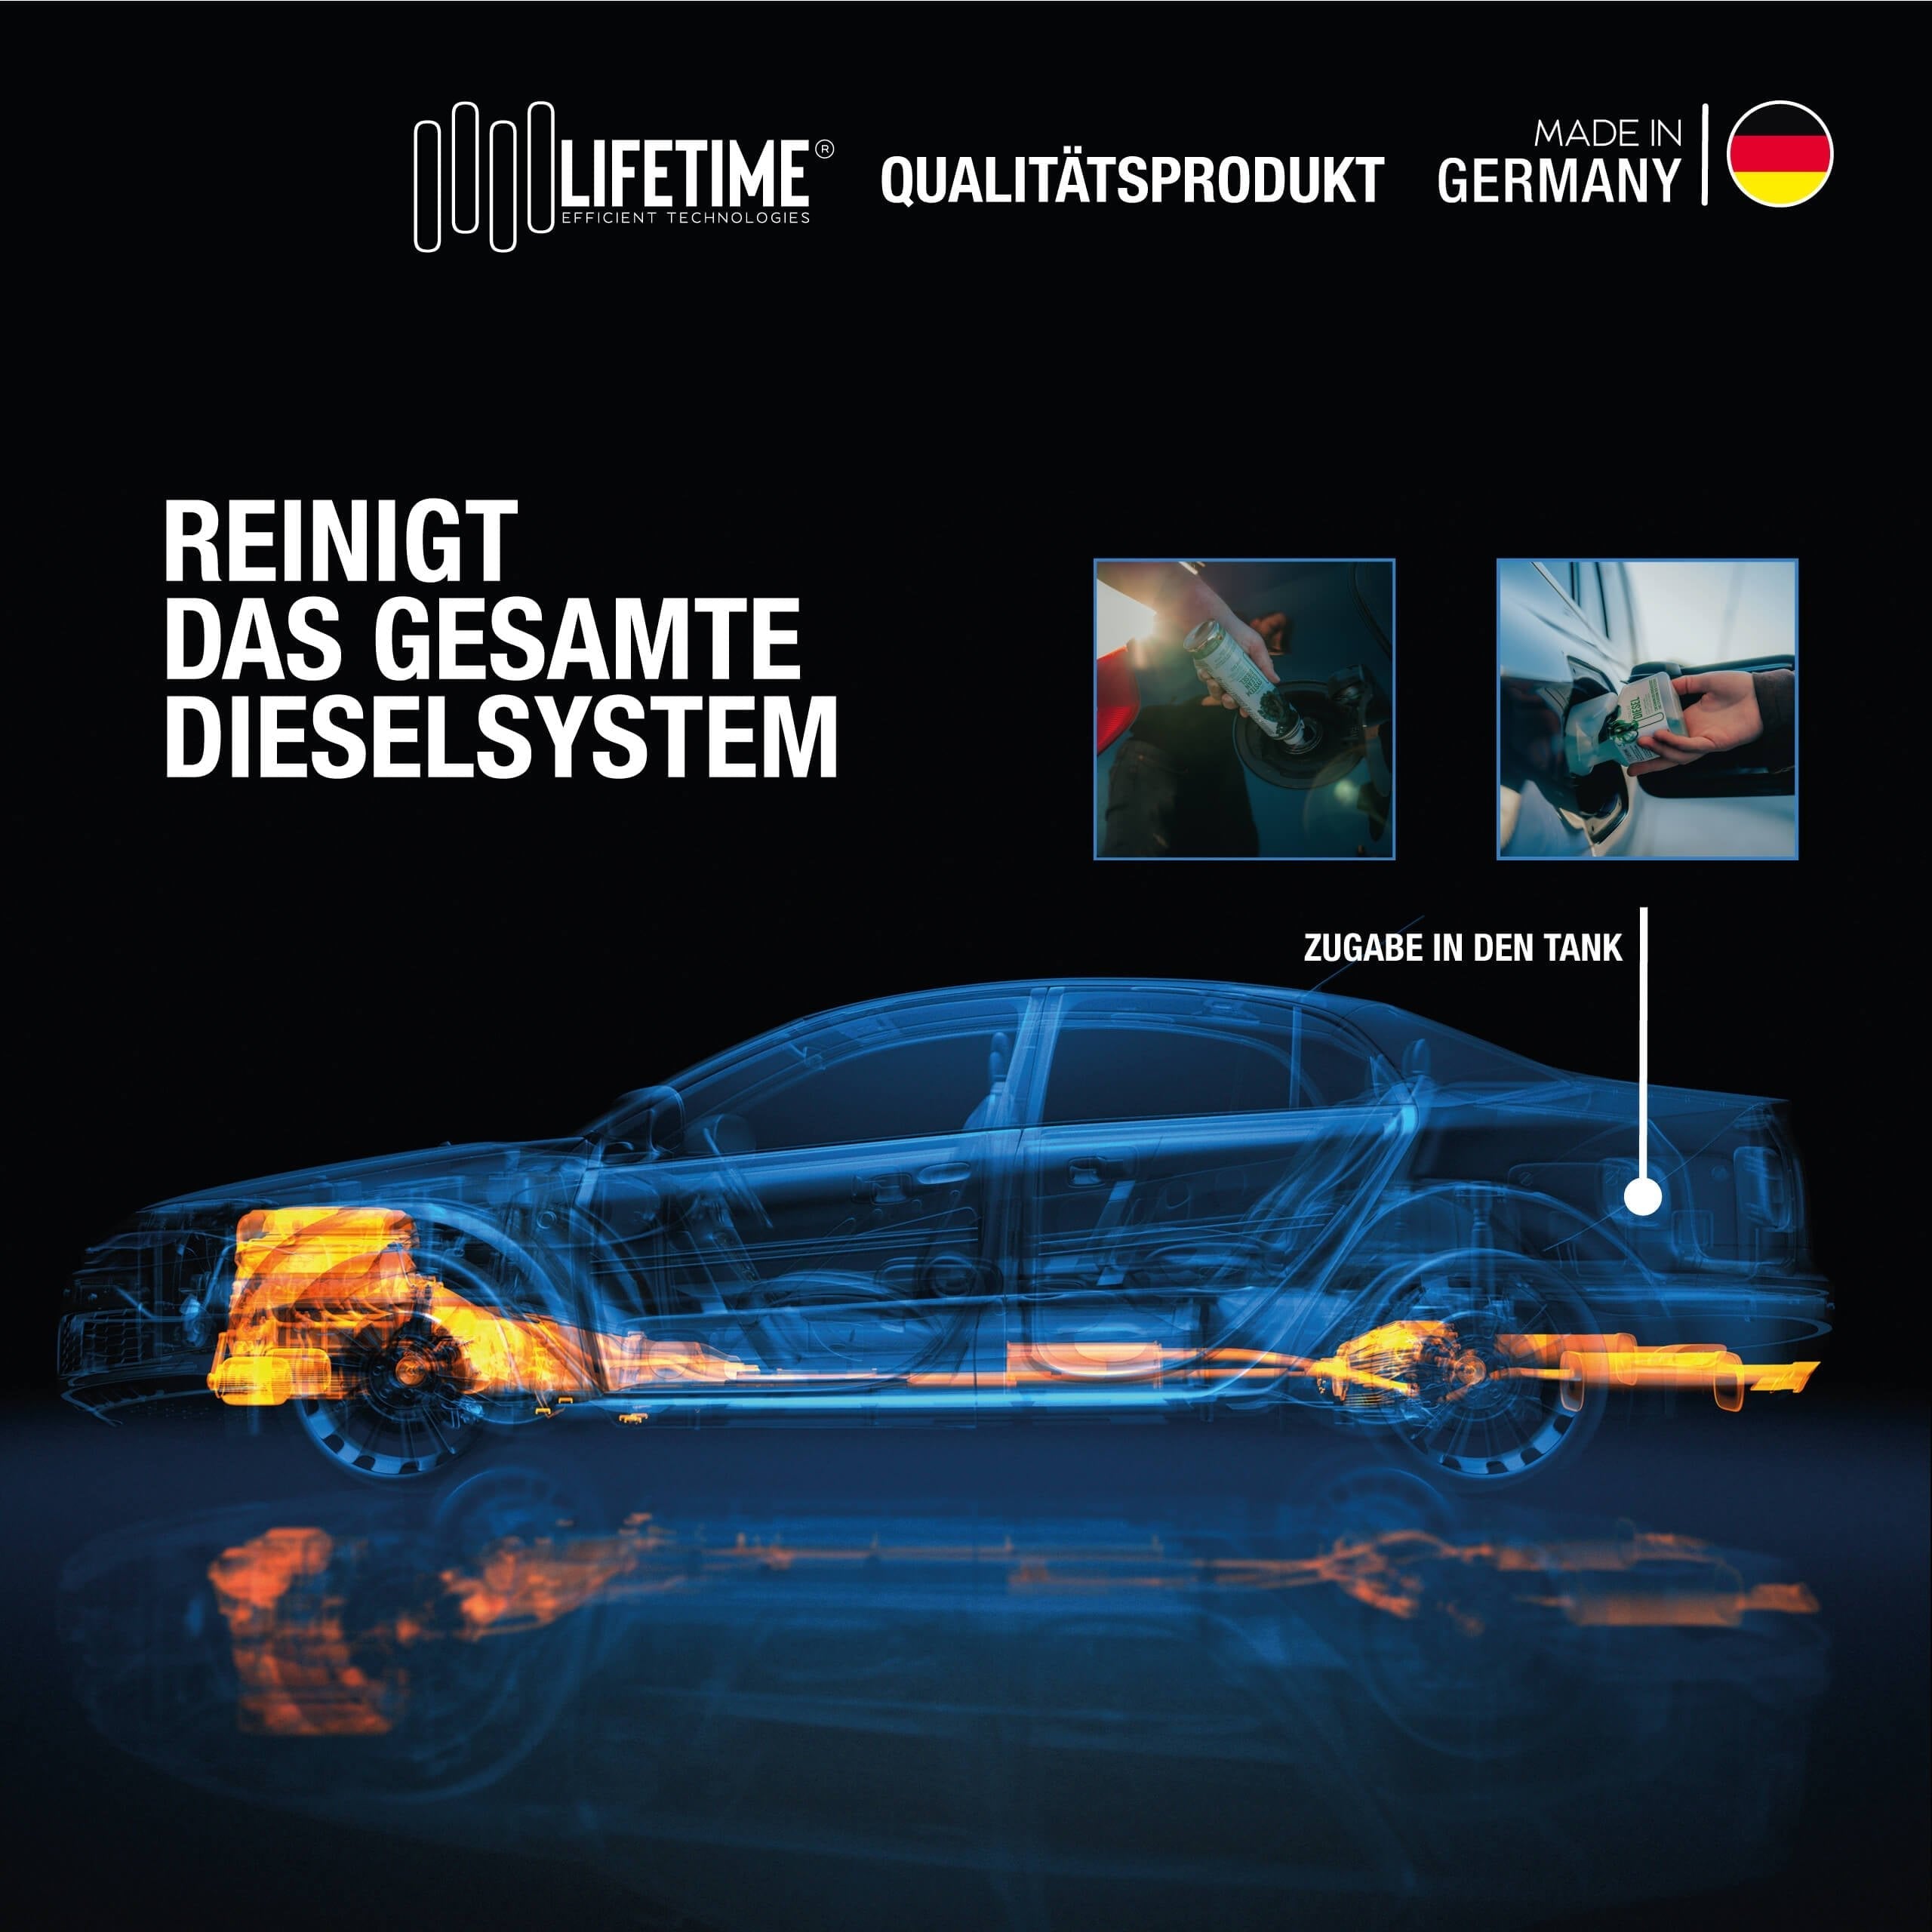 Lifetime Diesel-System Reinigungs-Kit - Lifetime Technologies Shop